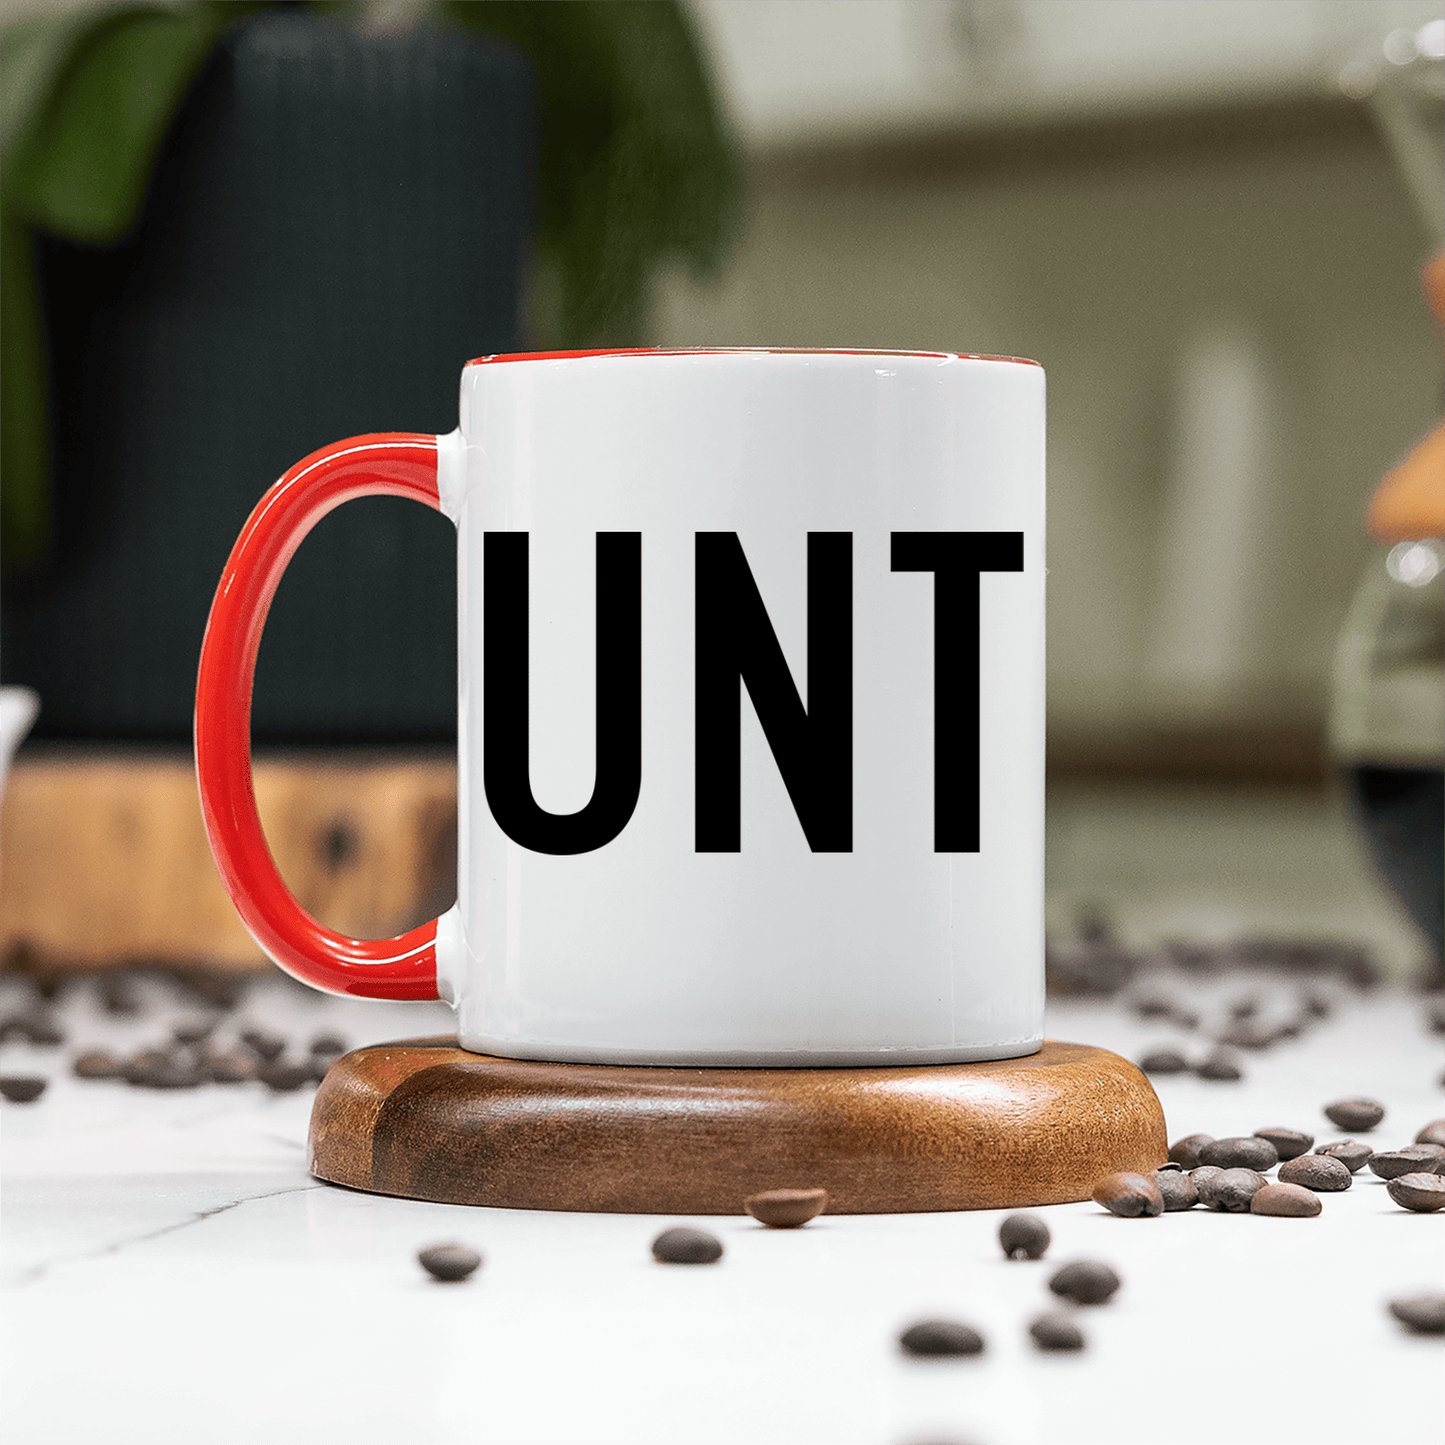 "Unt" Coffee Mug